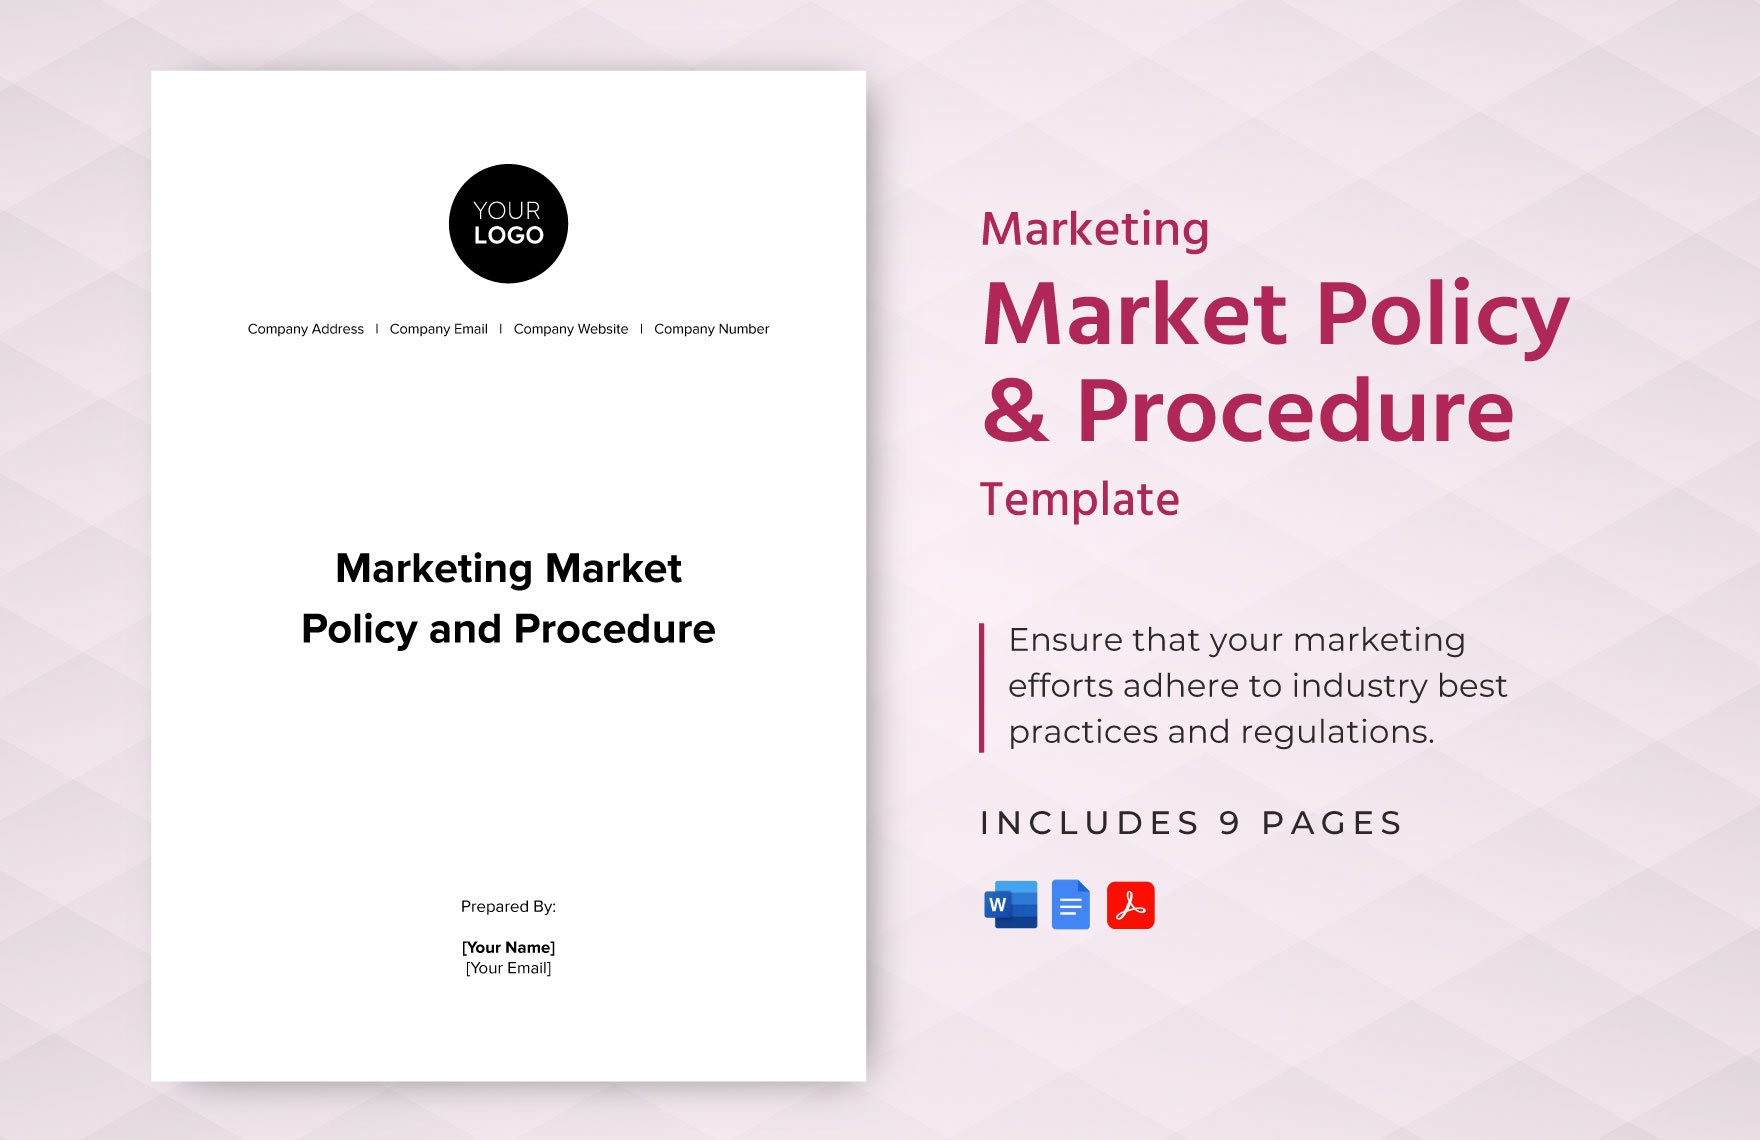 Marketing Market Policy & Procedure Template